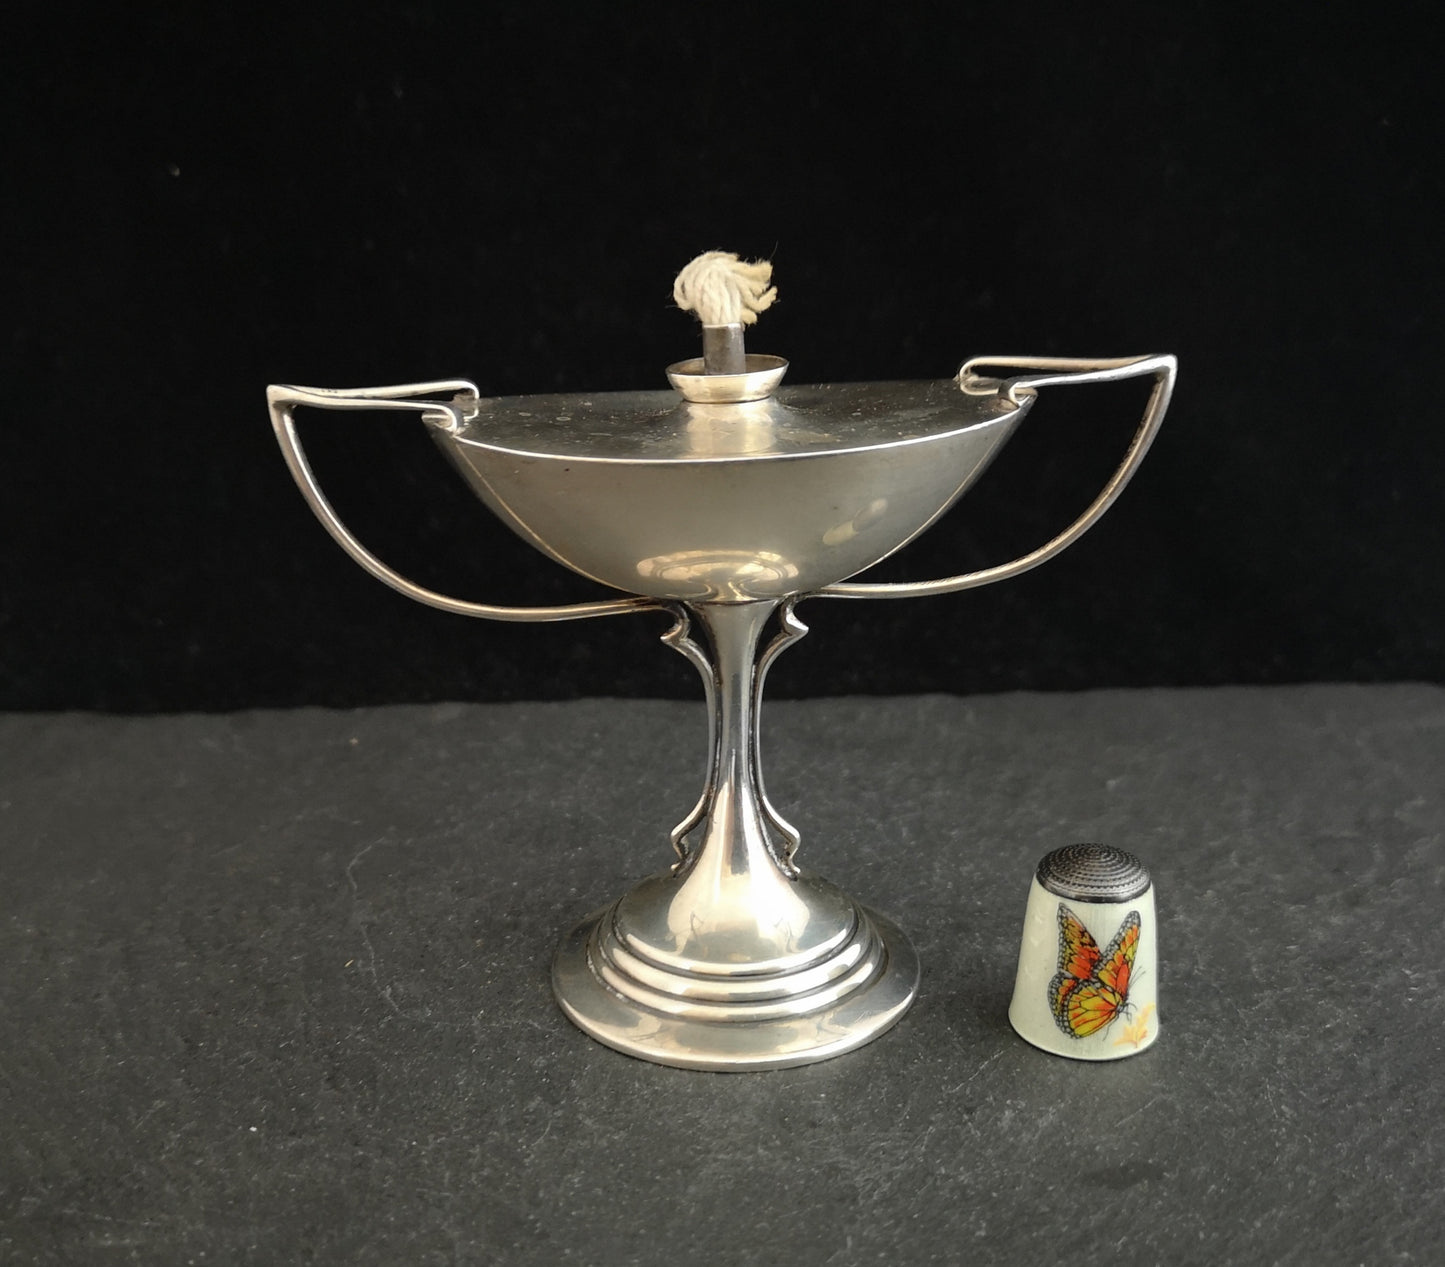 Antique silver cigar lighter, lamp, table top